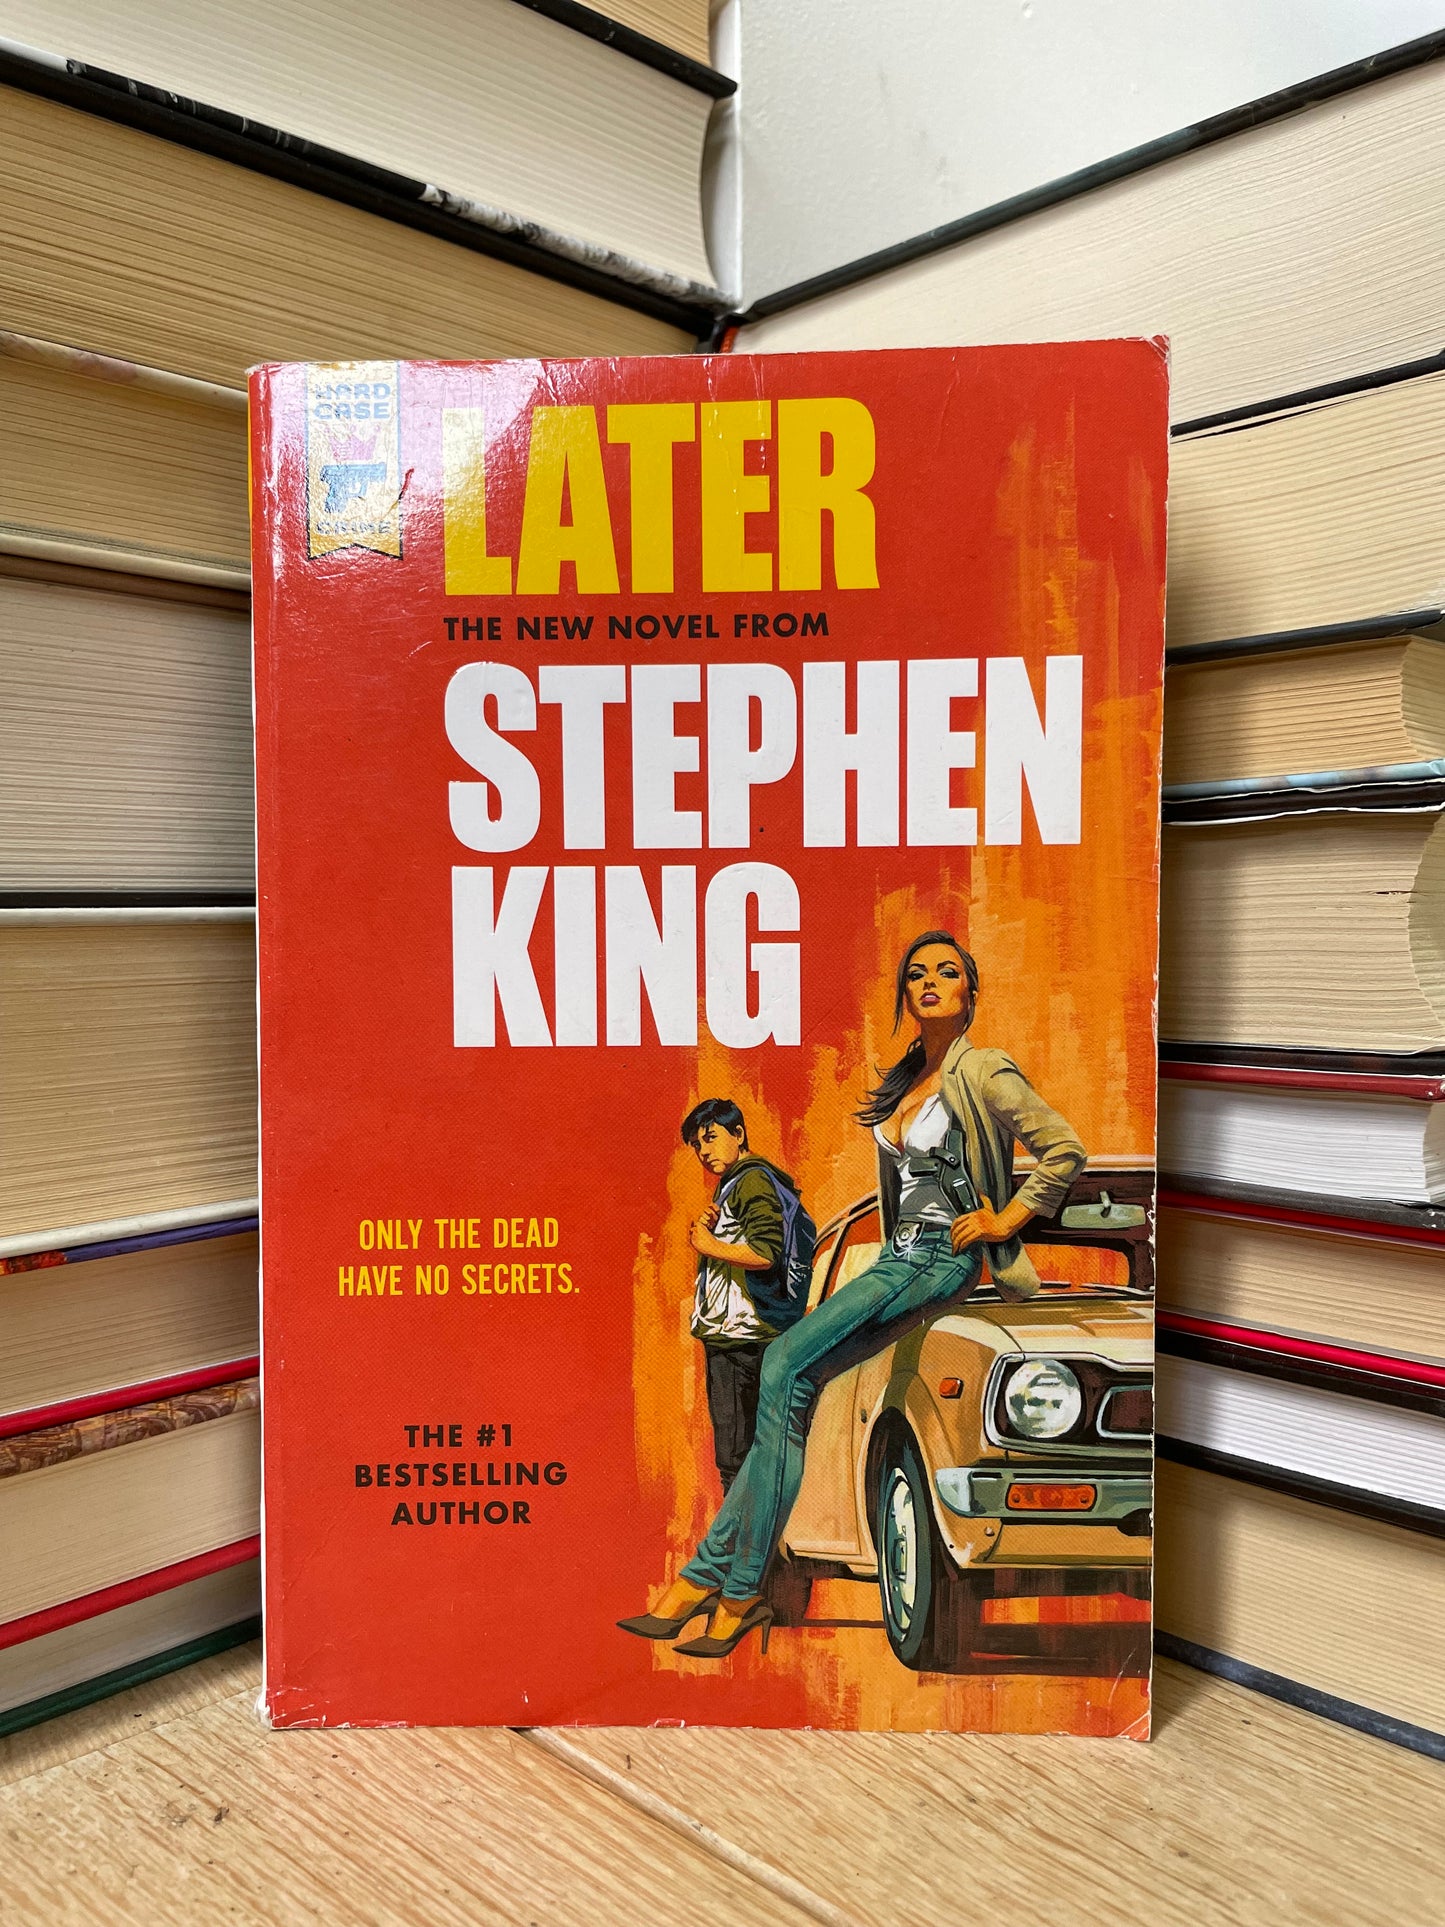 Stephen King - Later